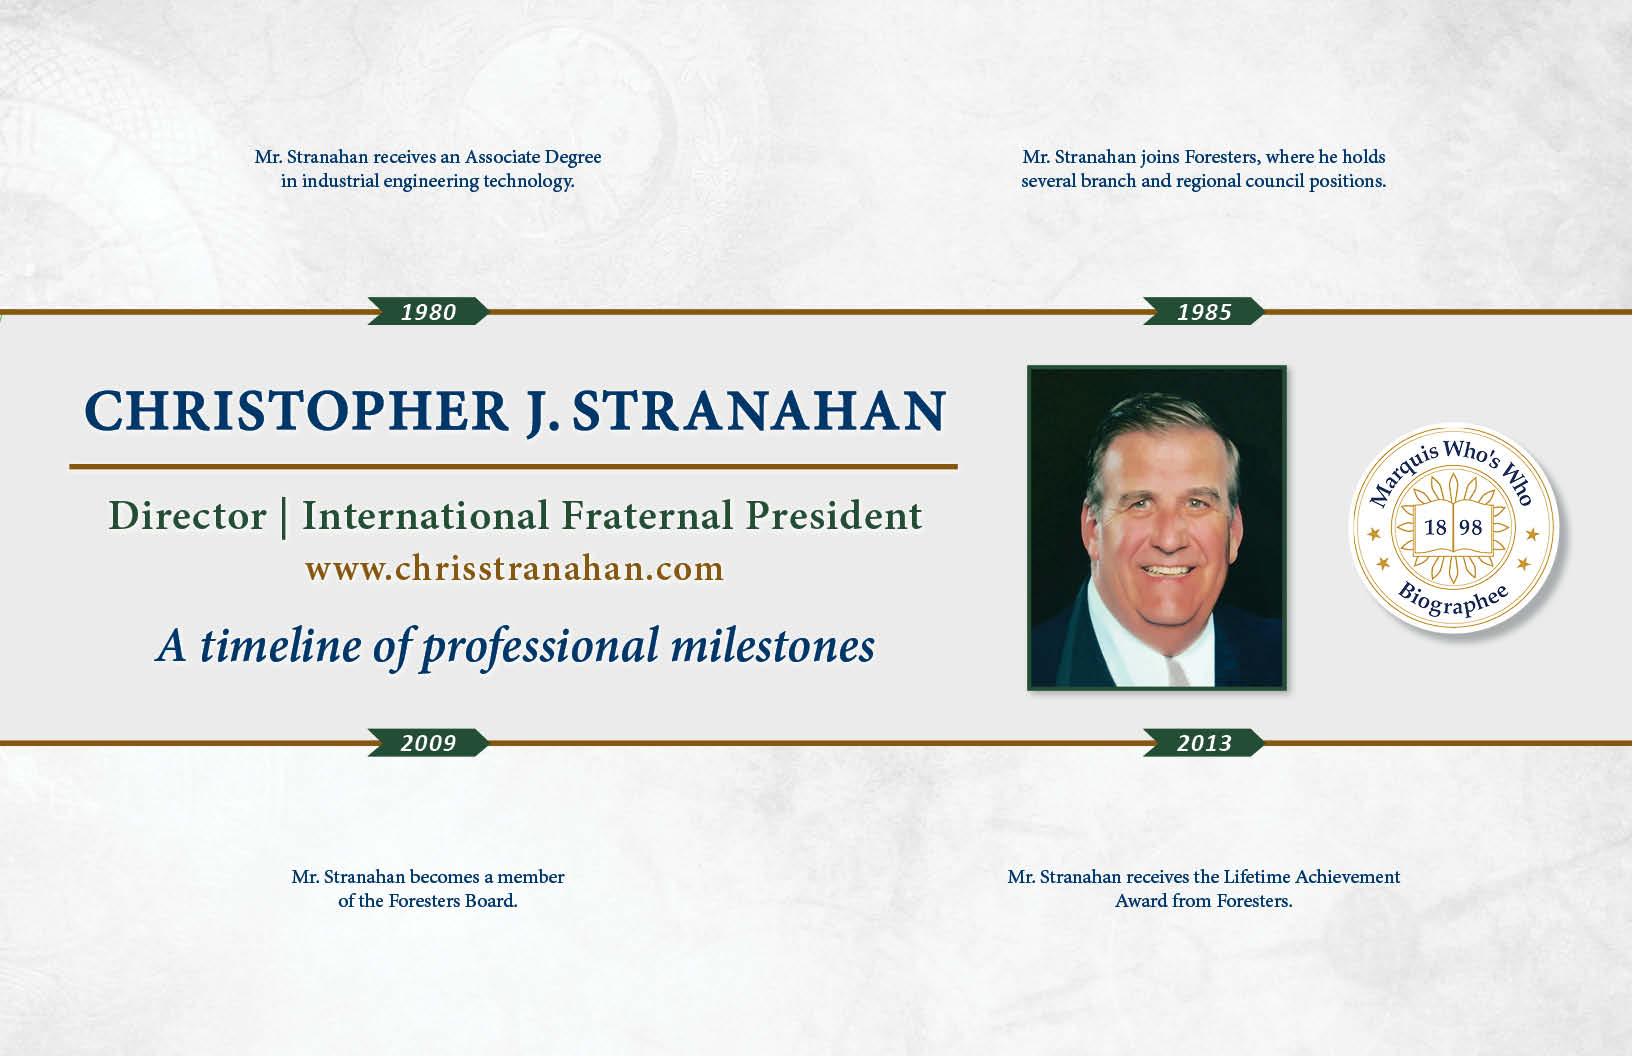 Christopher Stranahan Professional Milestones